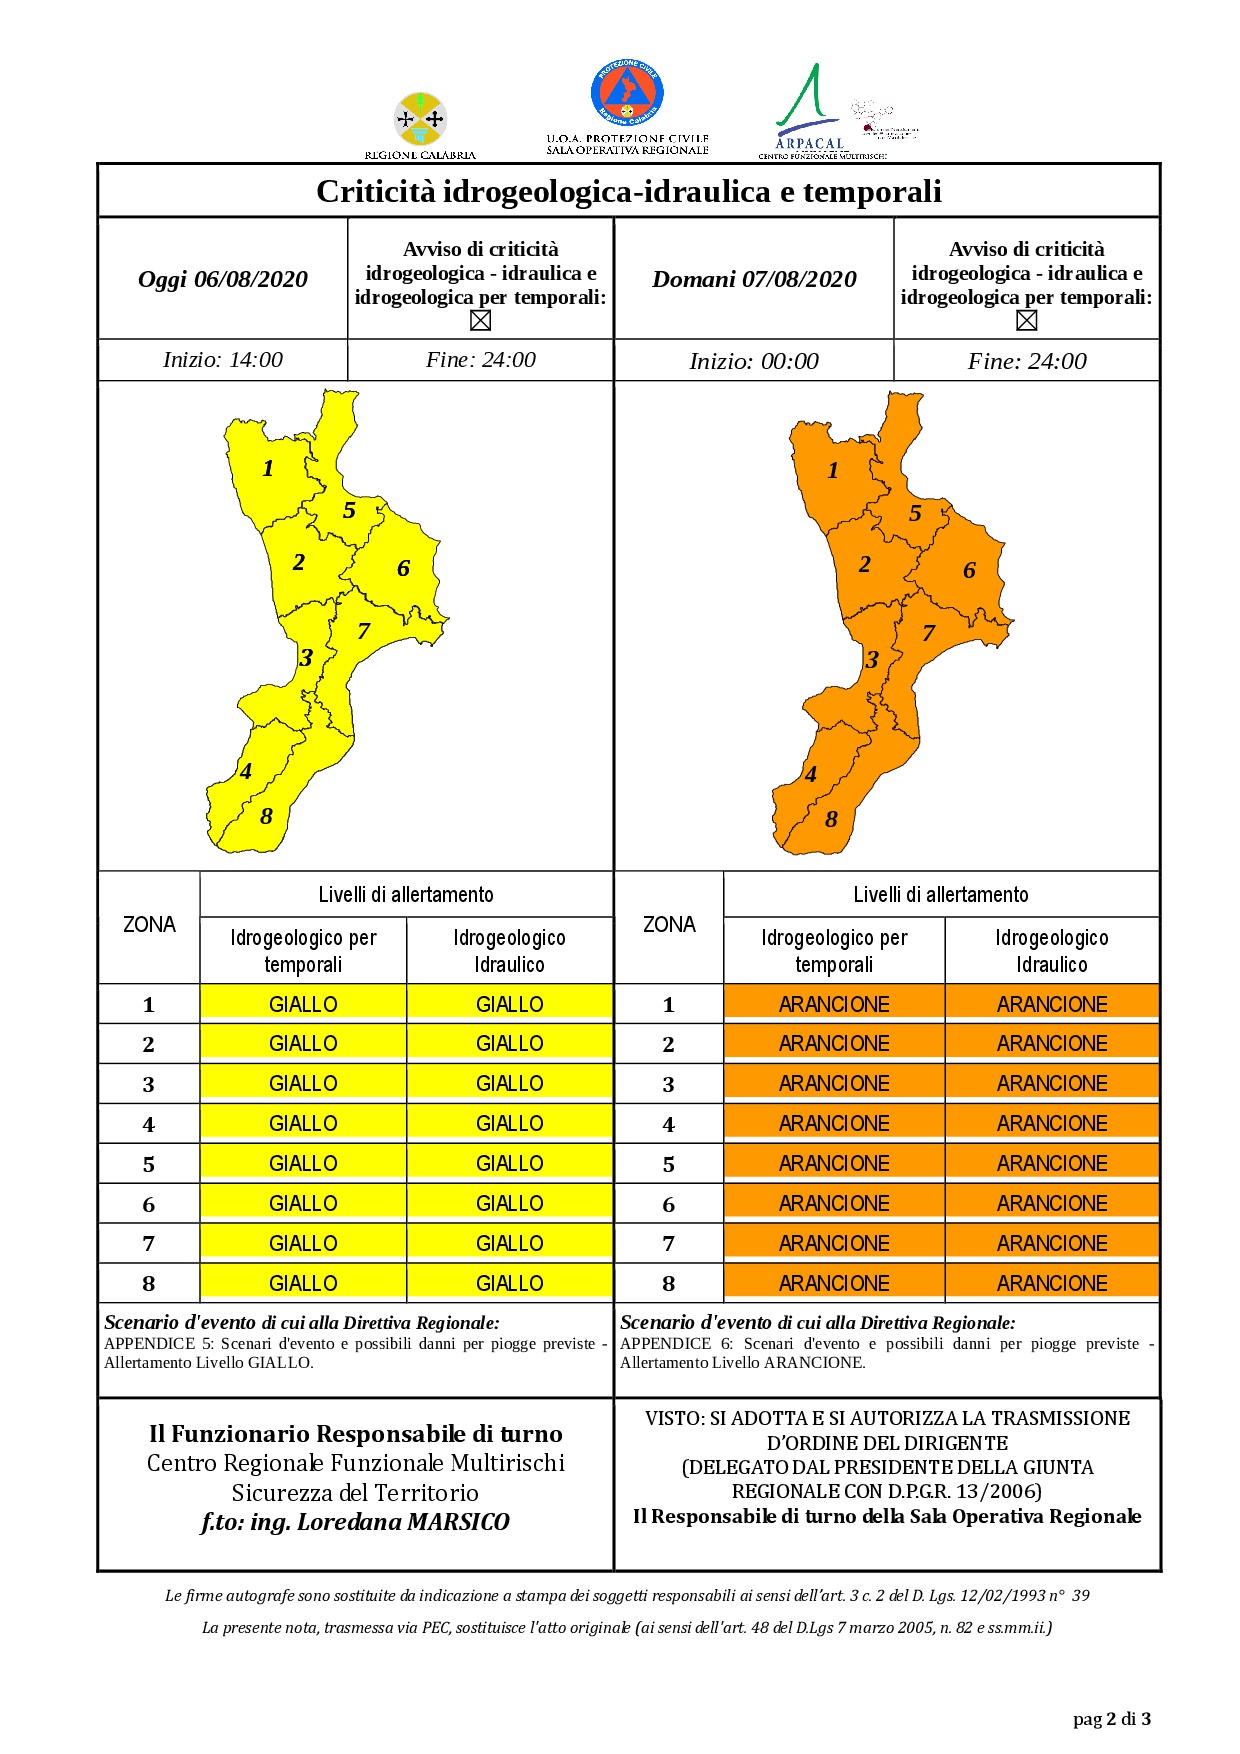 Criticità idrogeologica-idraulica e temporali in Calabria 06-08-2020